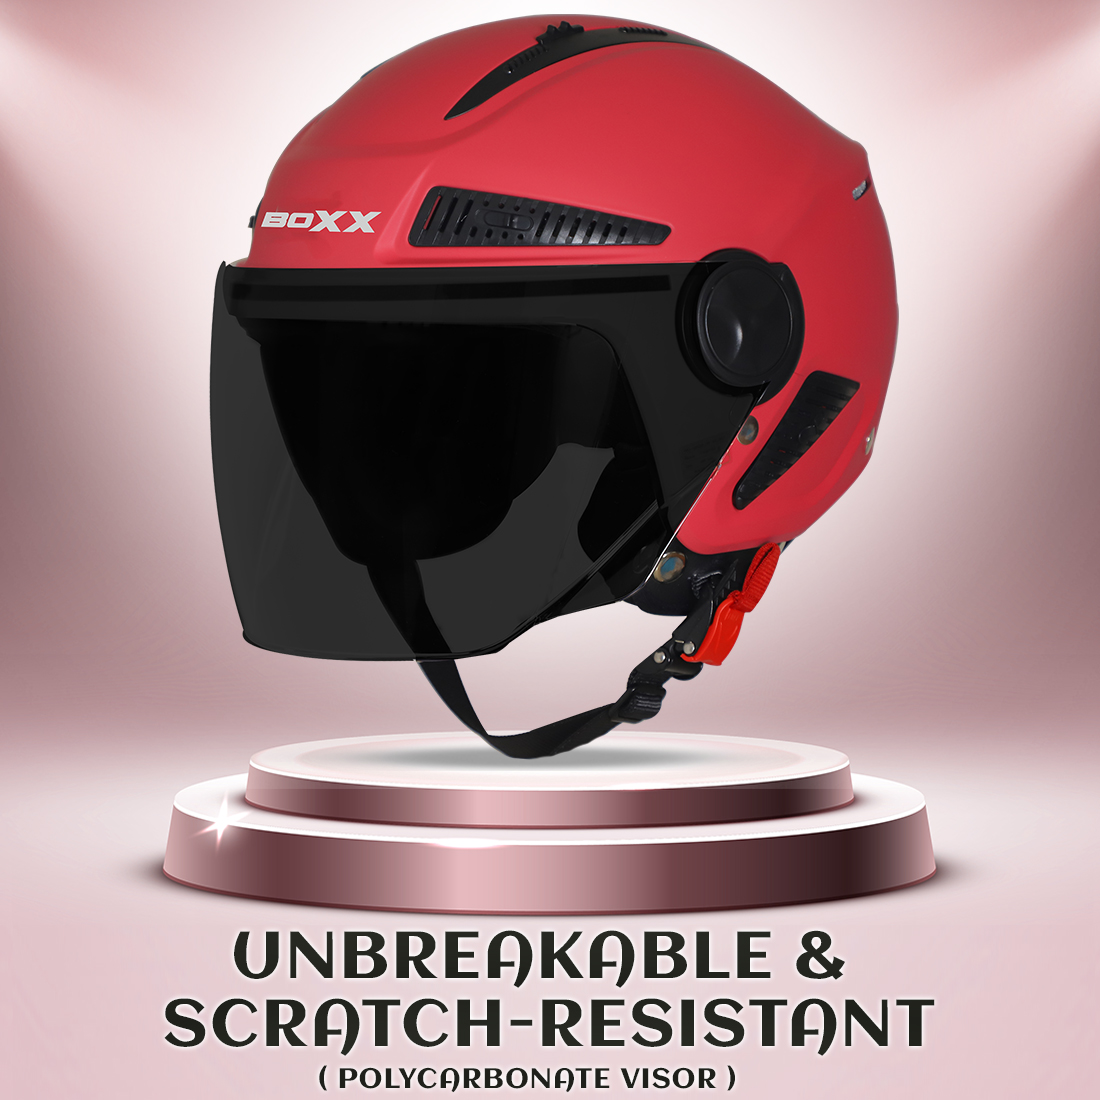 Steelbird SBH-24 Boxx ISI Certified Open Face Helmet For Men And Women (Matt Berry Pink With Smoke Visor)